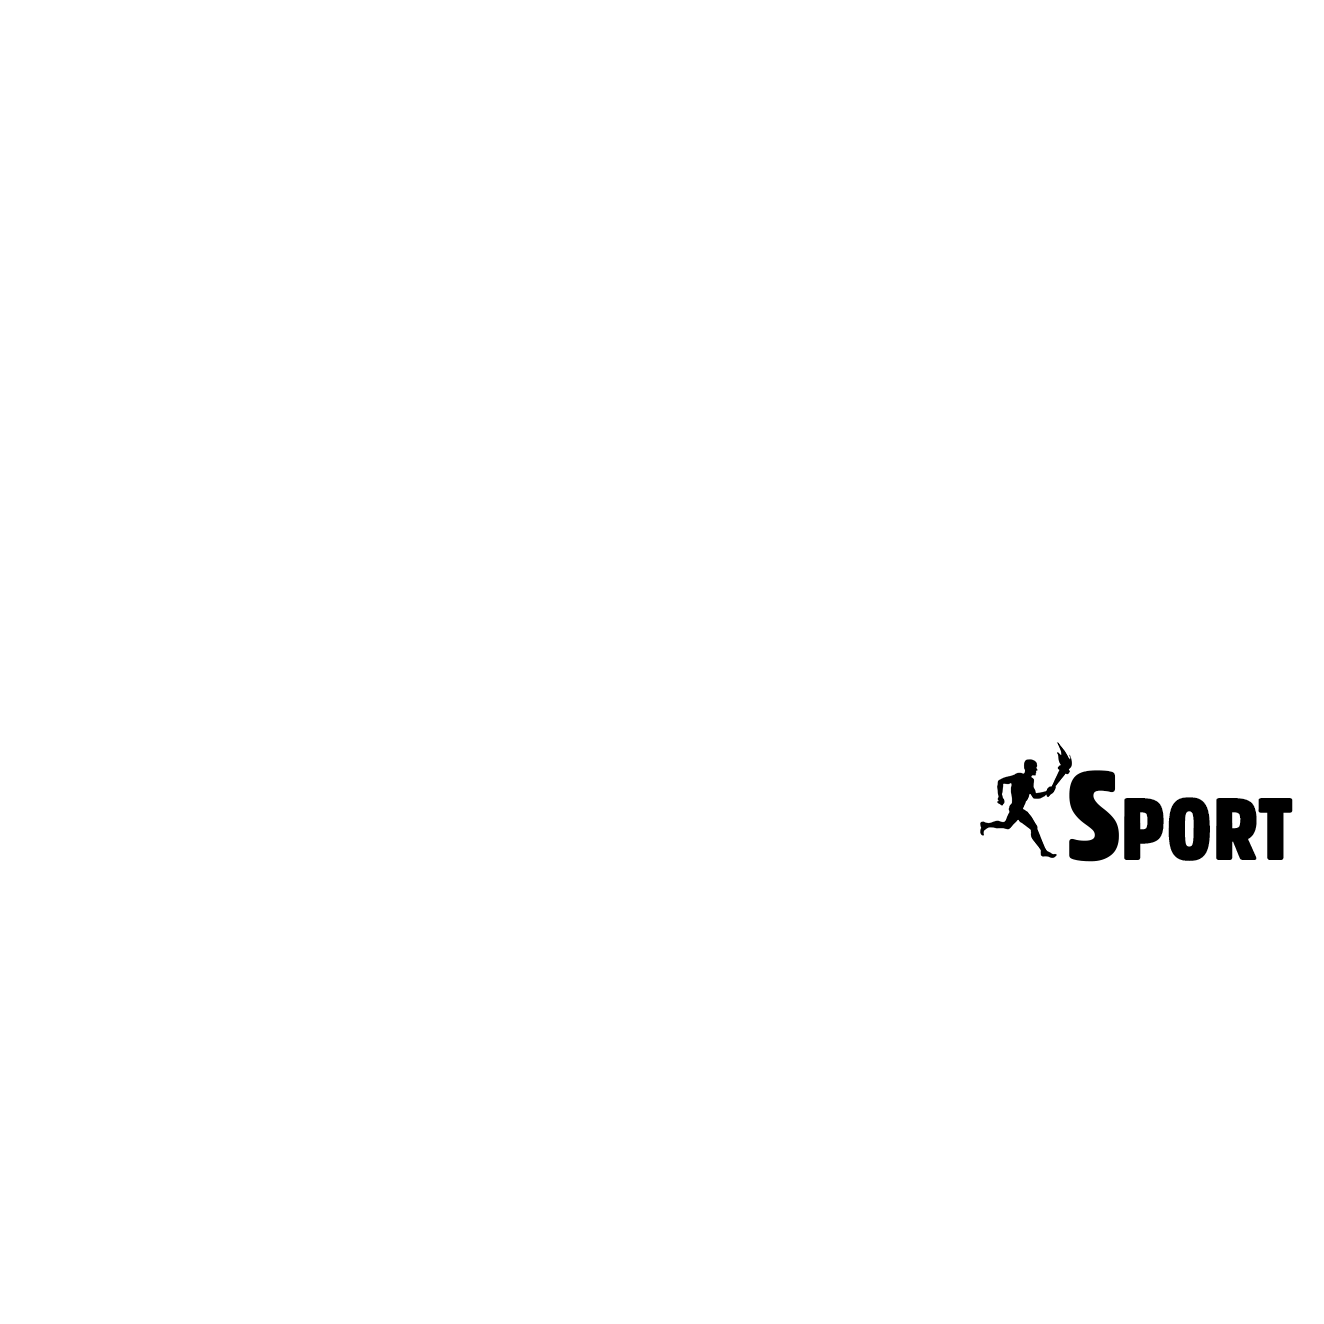 Bordo TV Sport